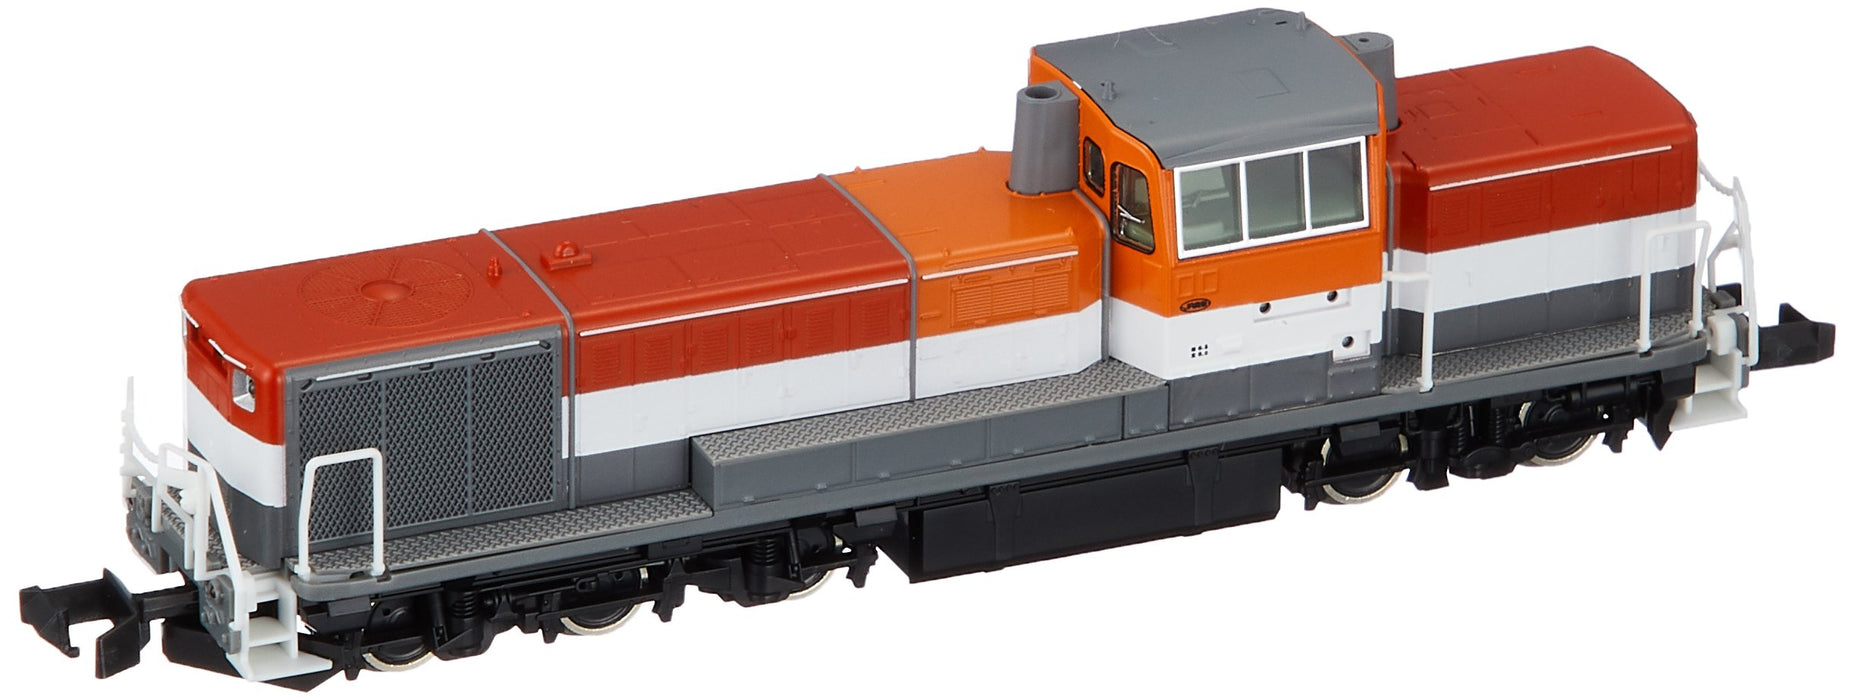 Tomytec Tomix N Gauge 2232 De10 1000 Jr Cargo Specification Model Train